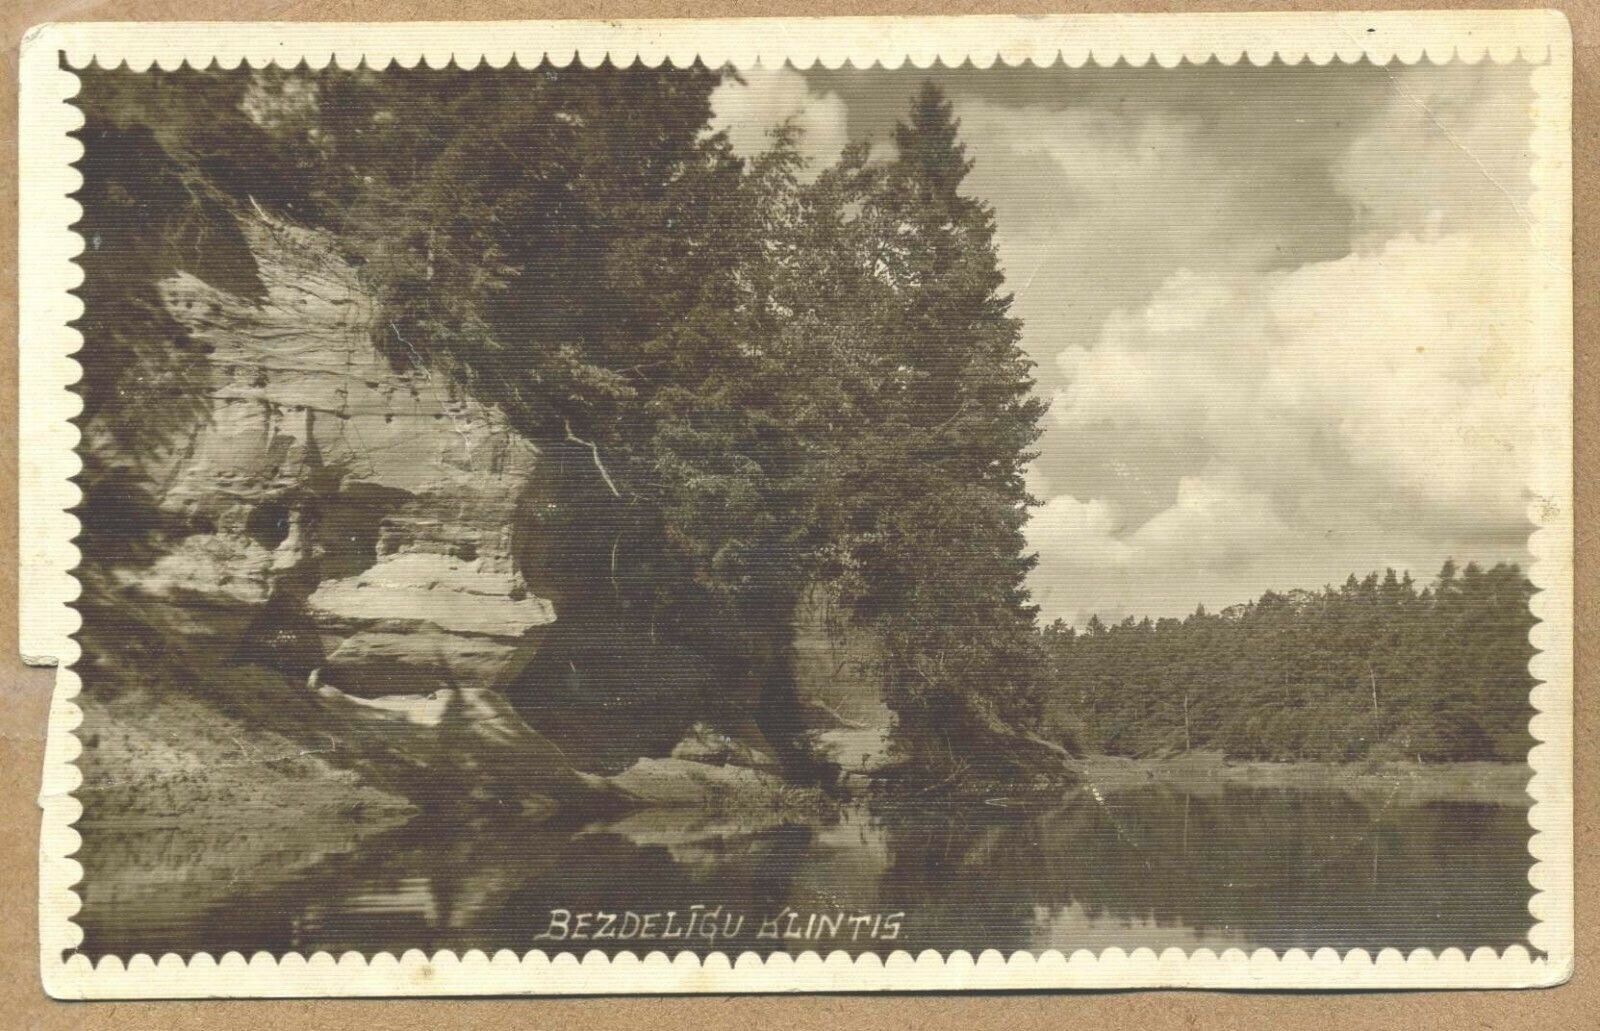 Latvia 1934 Bezdeligu Klintis Postcard Nuki Cancel on Damaged Stamp